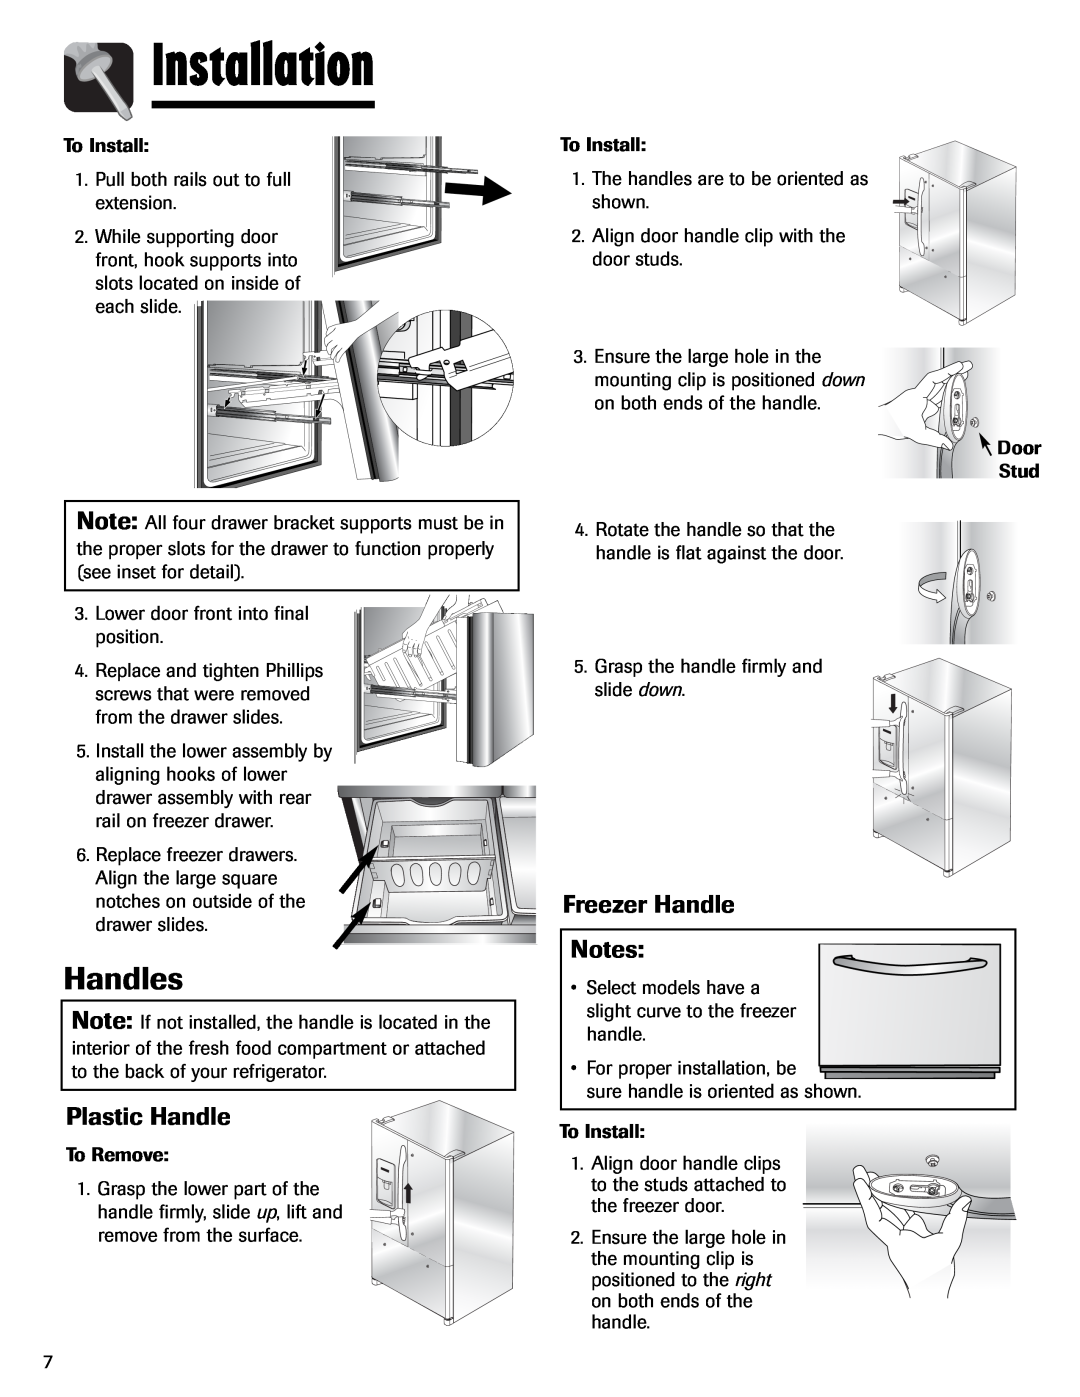 Amana AFI2538AEW important safety instructions Handles, Plastic Handle, Freezer Handle, Installation 